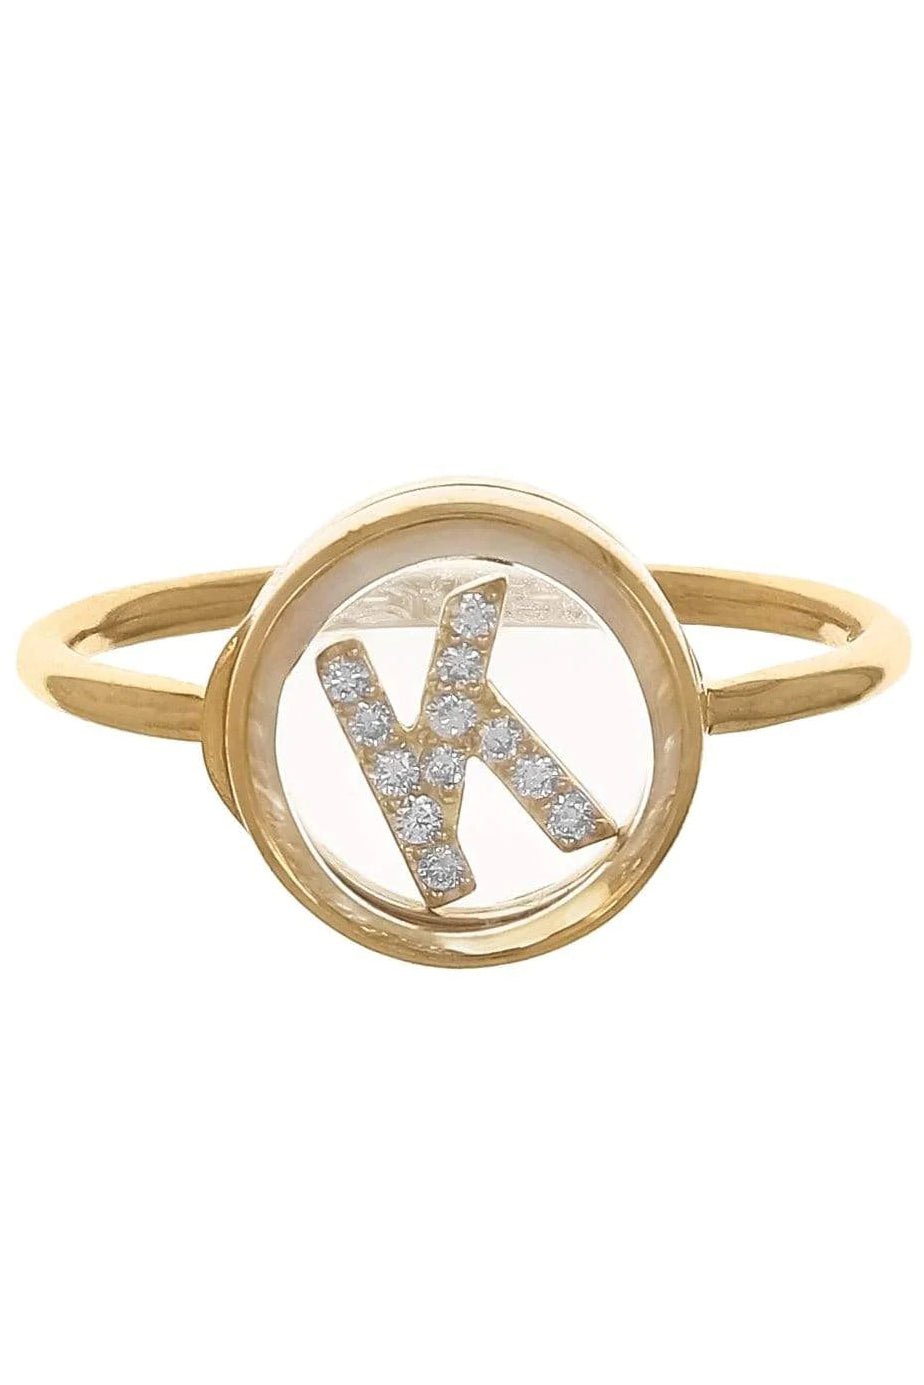 MORITZ GLIK-"K" Initial Locket Ring-YELLOW GOLD